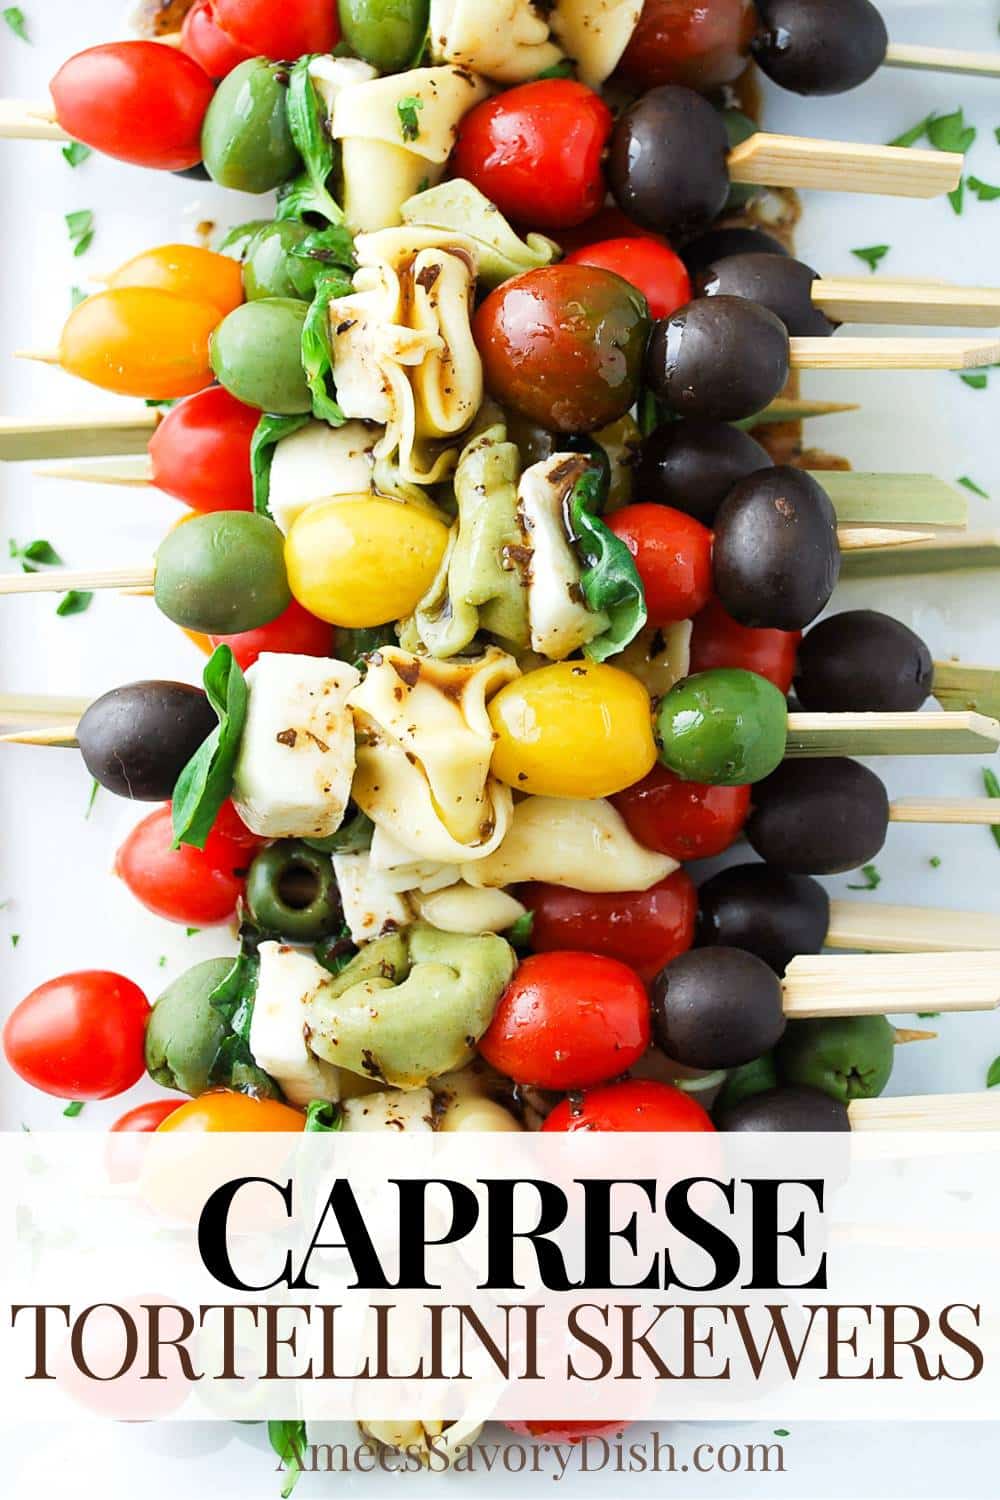 Caprese Tortellini Skewers showcases fresh basil, tomatoes, mozzarella cheese, olives, & cheese tortellini drizzled with balsamic dressing. via @Ameessavorydish